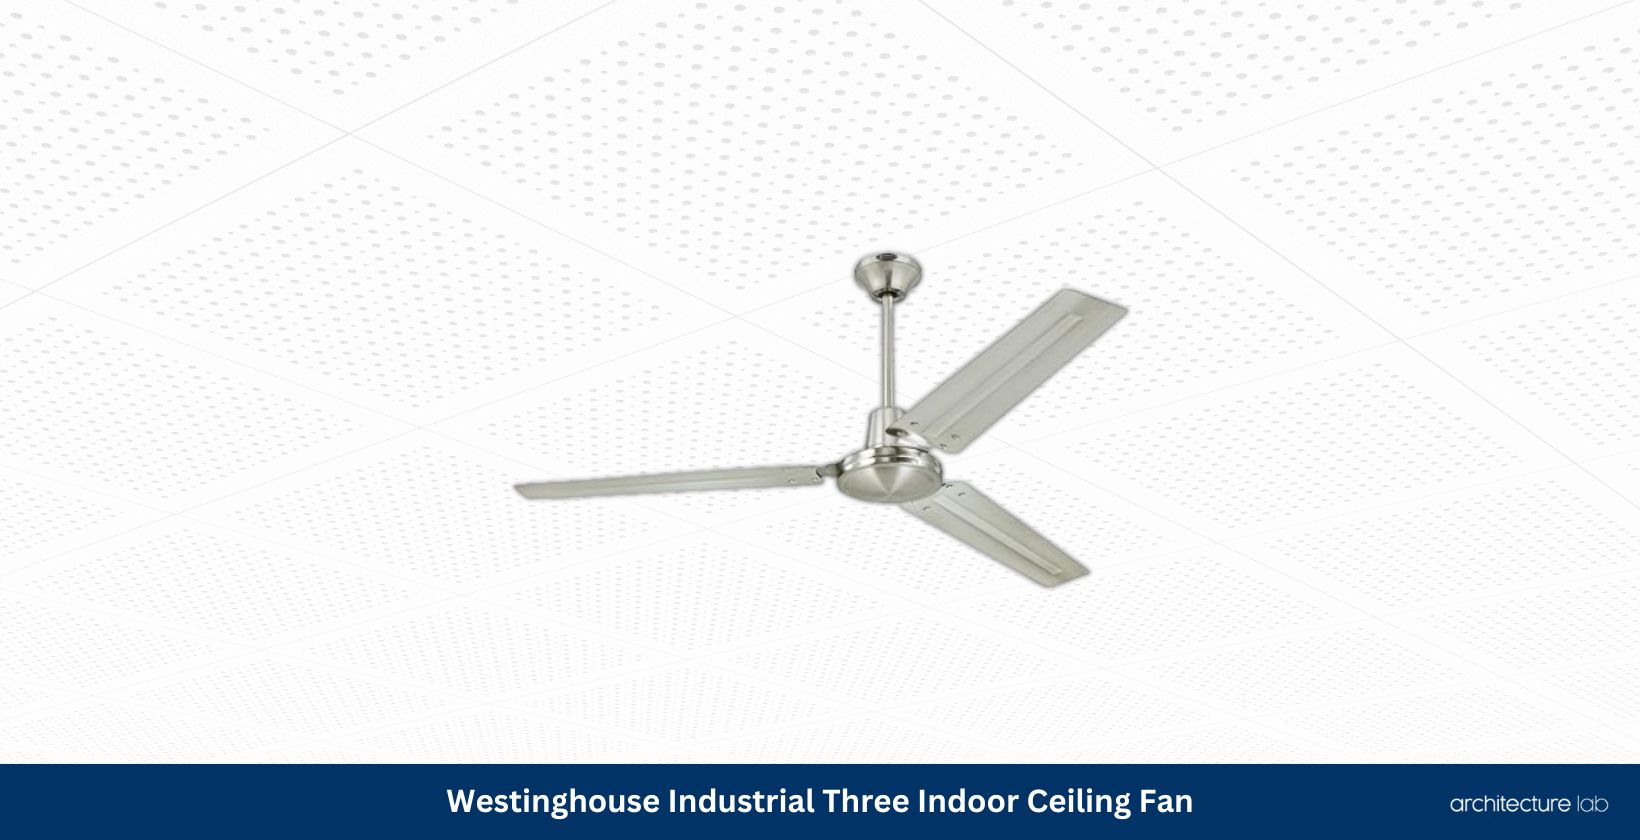 Westinghouse 7861400 industrial 56 inch three indoor ceiling fan